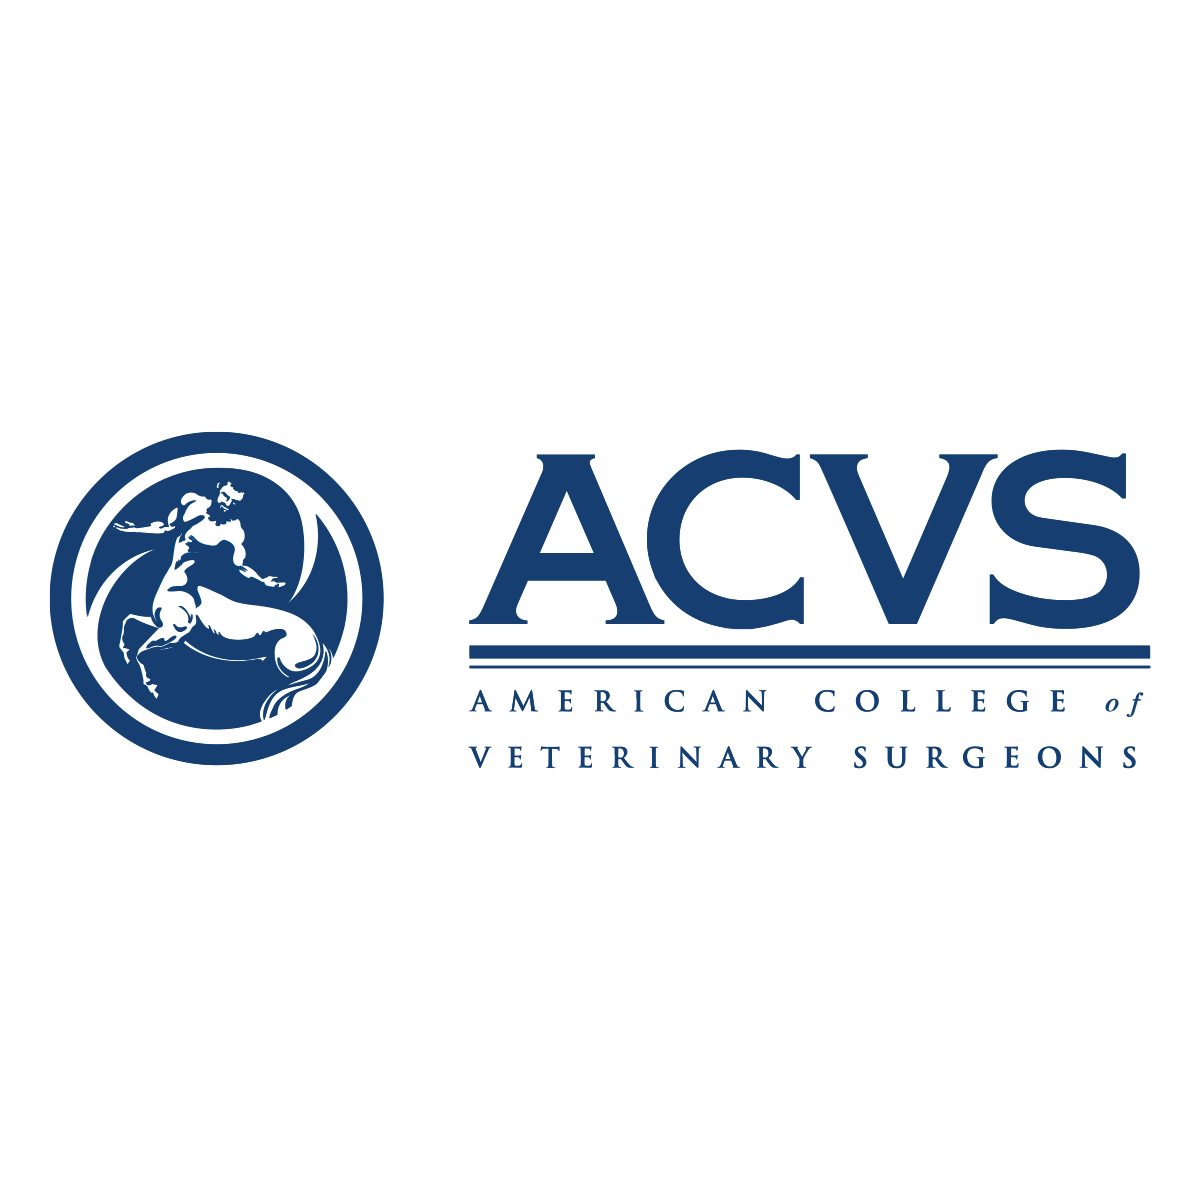 Free Veterinary Logo - Make Your Own Veterinary Logo